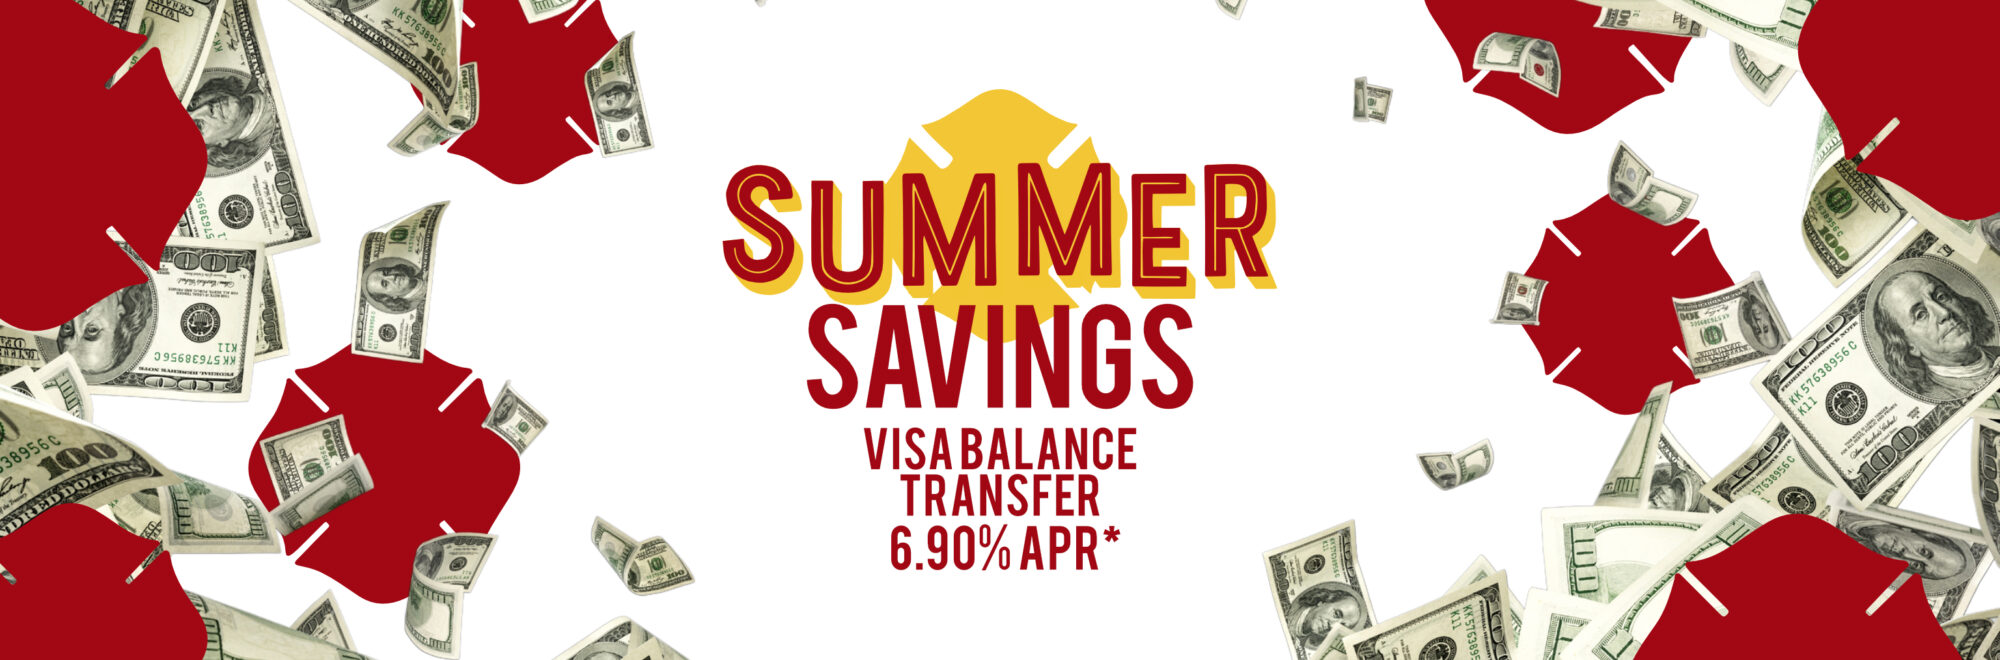 6.9% APR Visa Balance Transfer is Back!